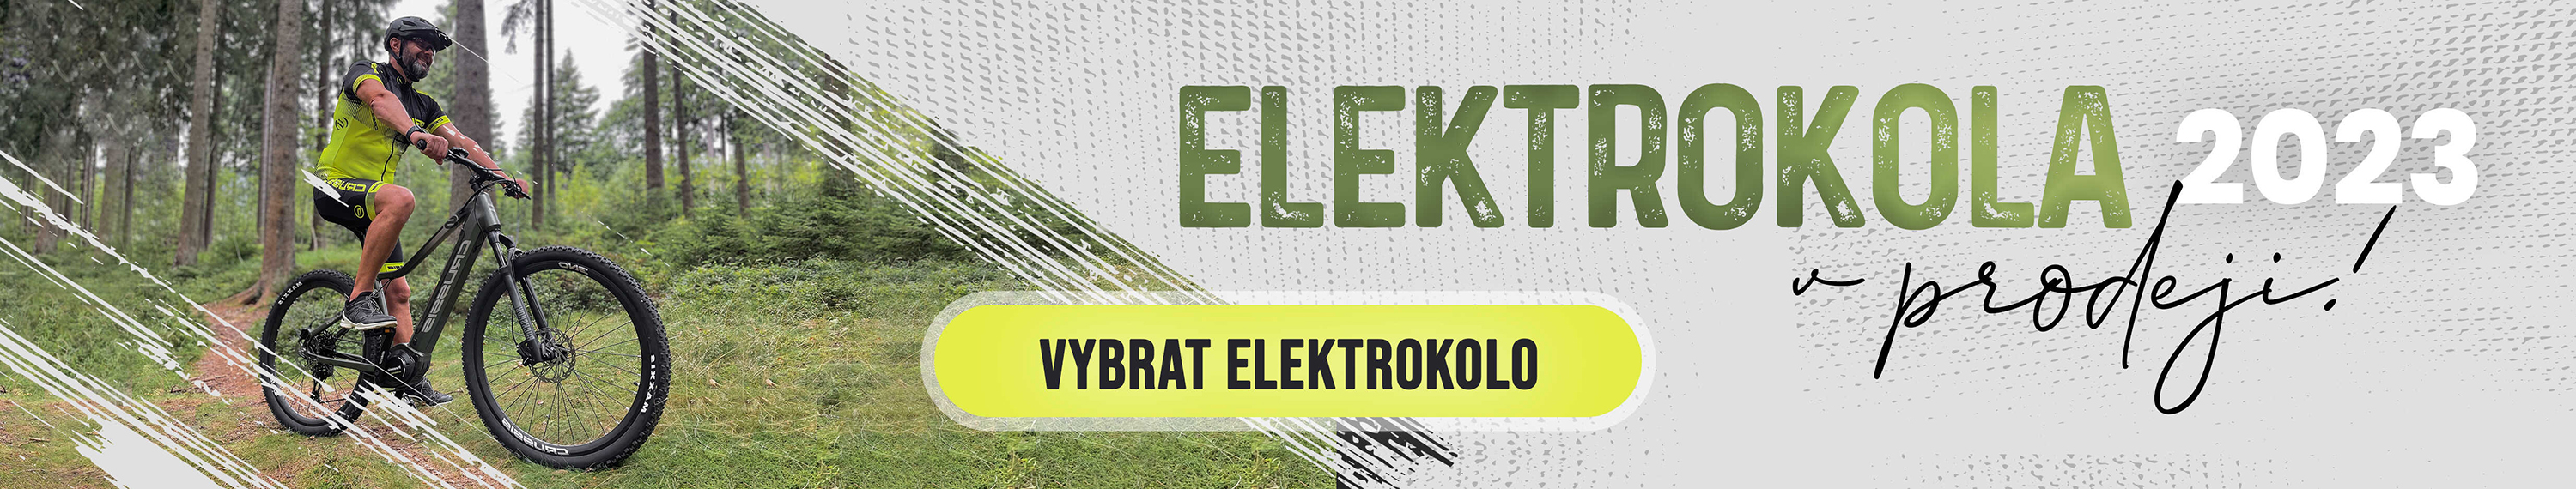 Elektrokola 2023 – na prodejnách i na e-shopu!